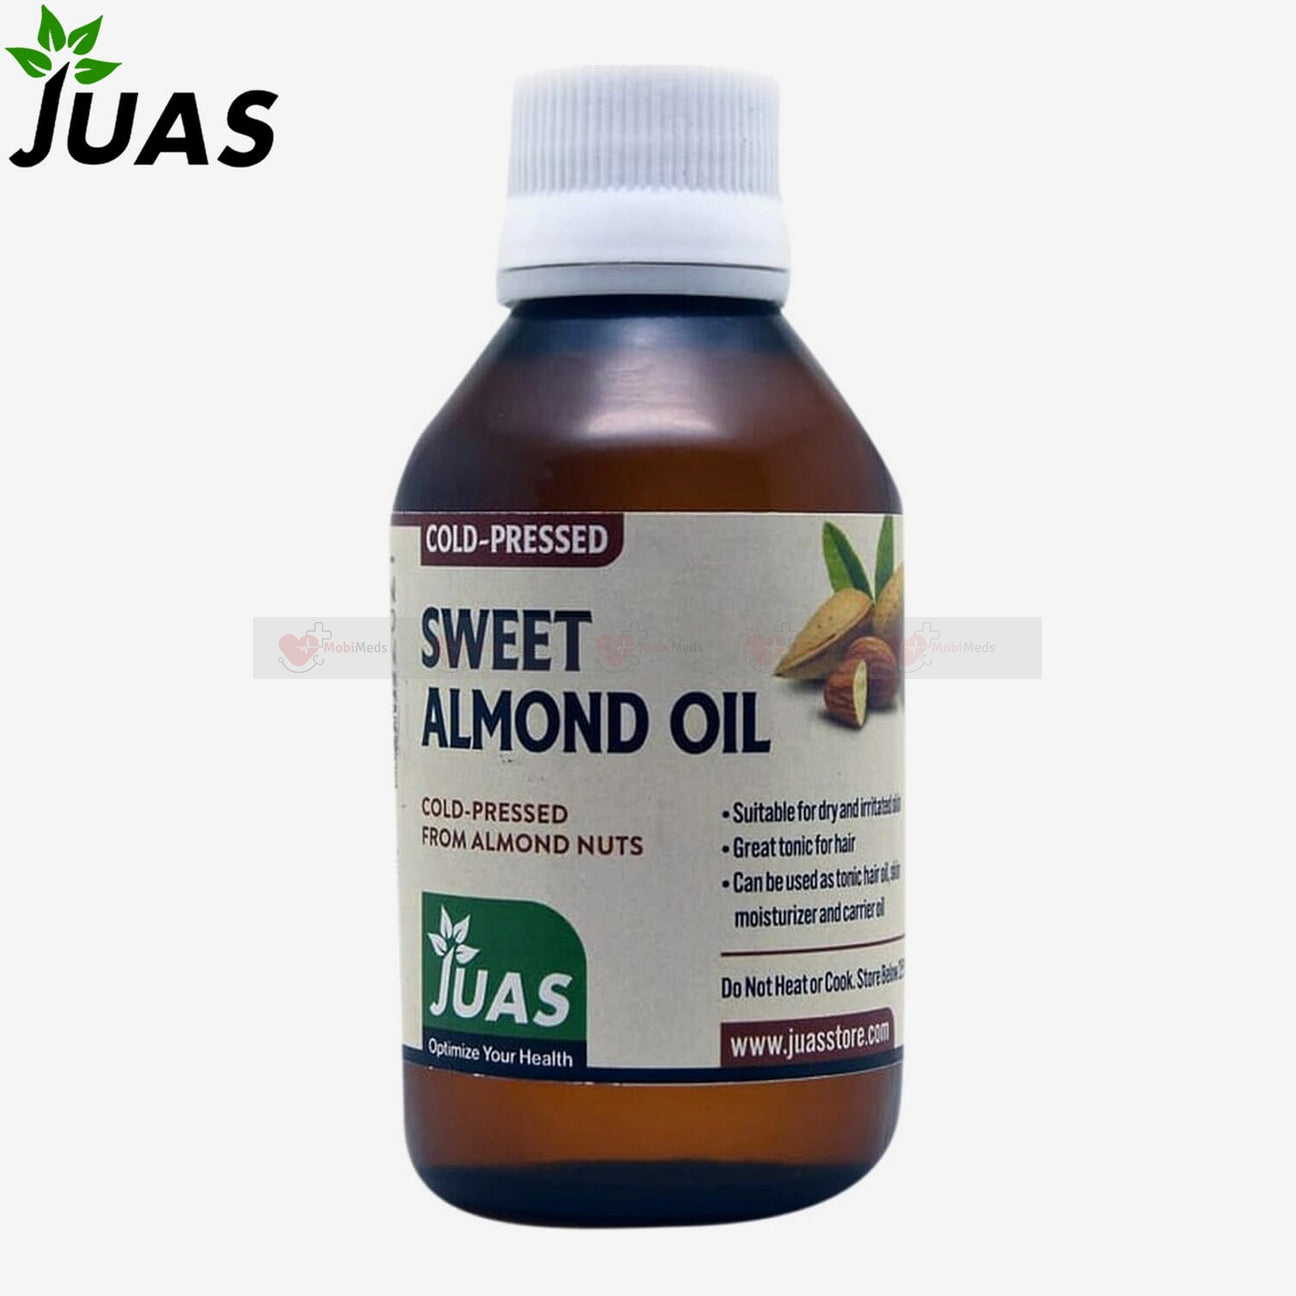 JUAS Sweet Almond Oil - Cold Pressed - 120 ml